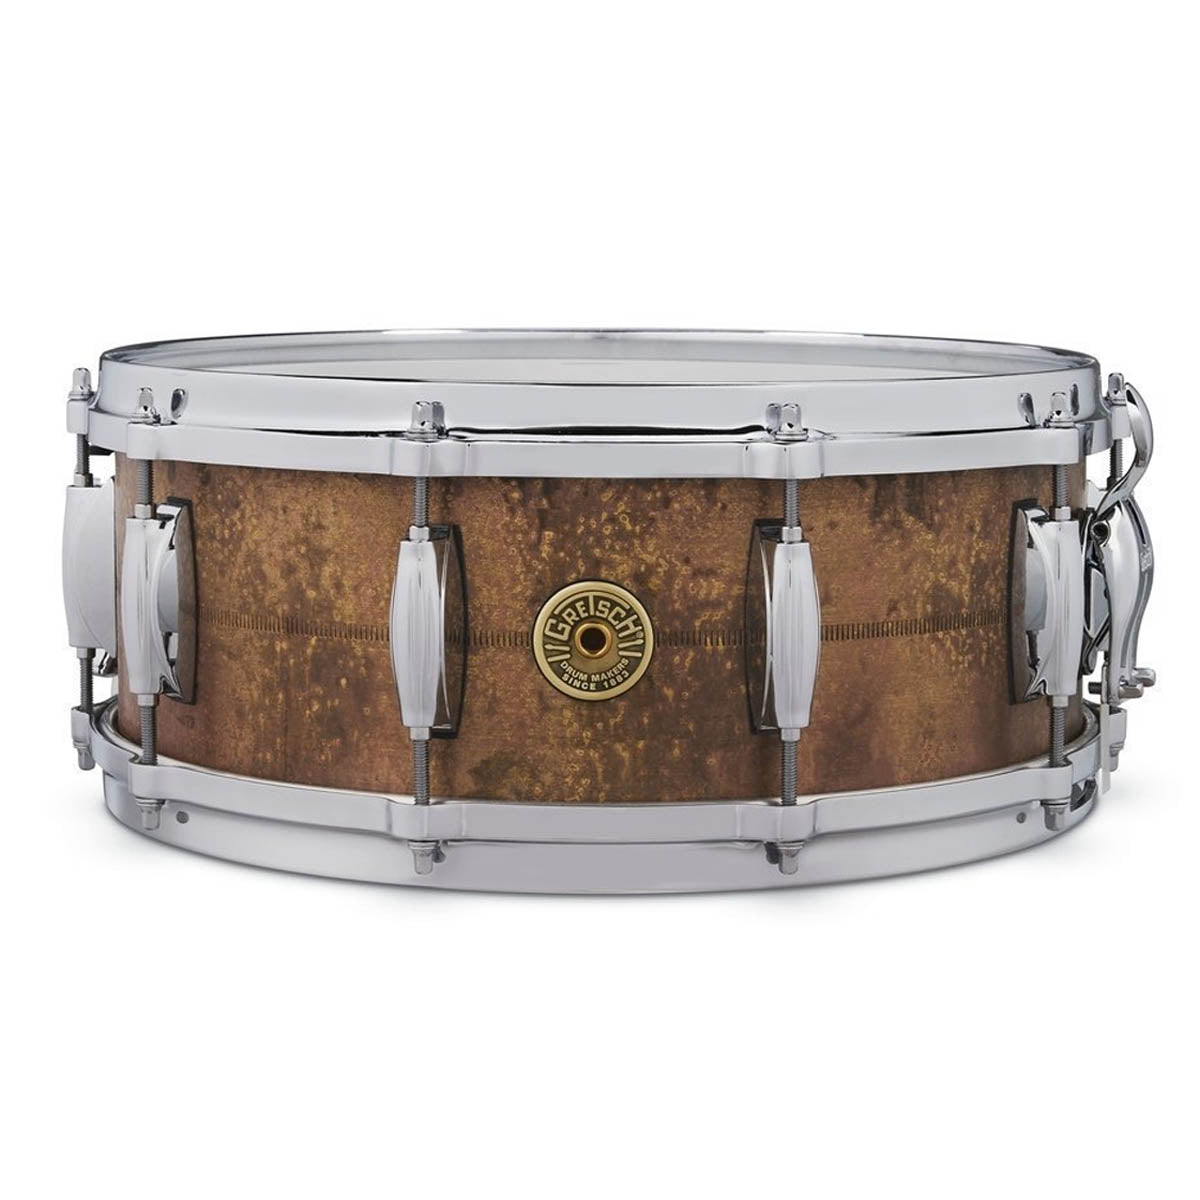 Gretsch USA Keith Carlock Signature 14"x5.5" Snare Drum